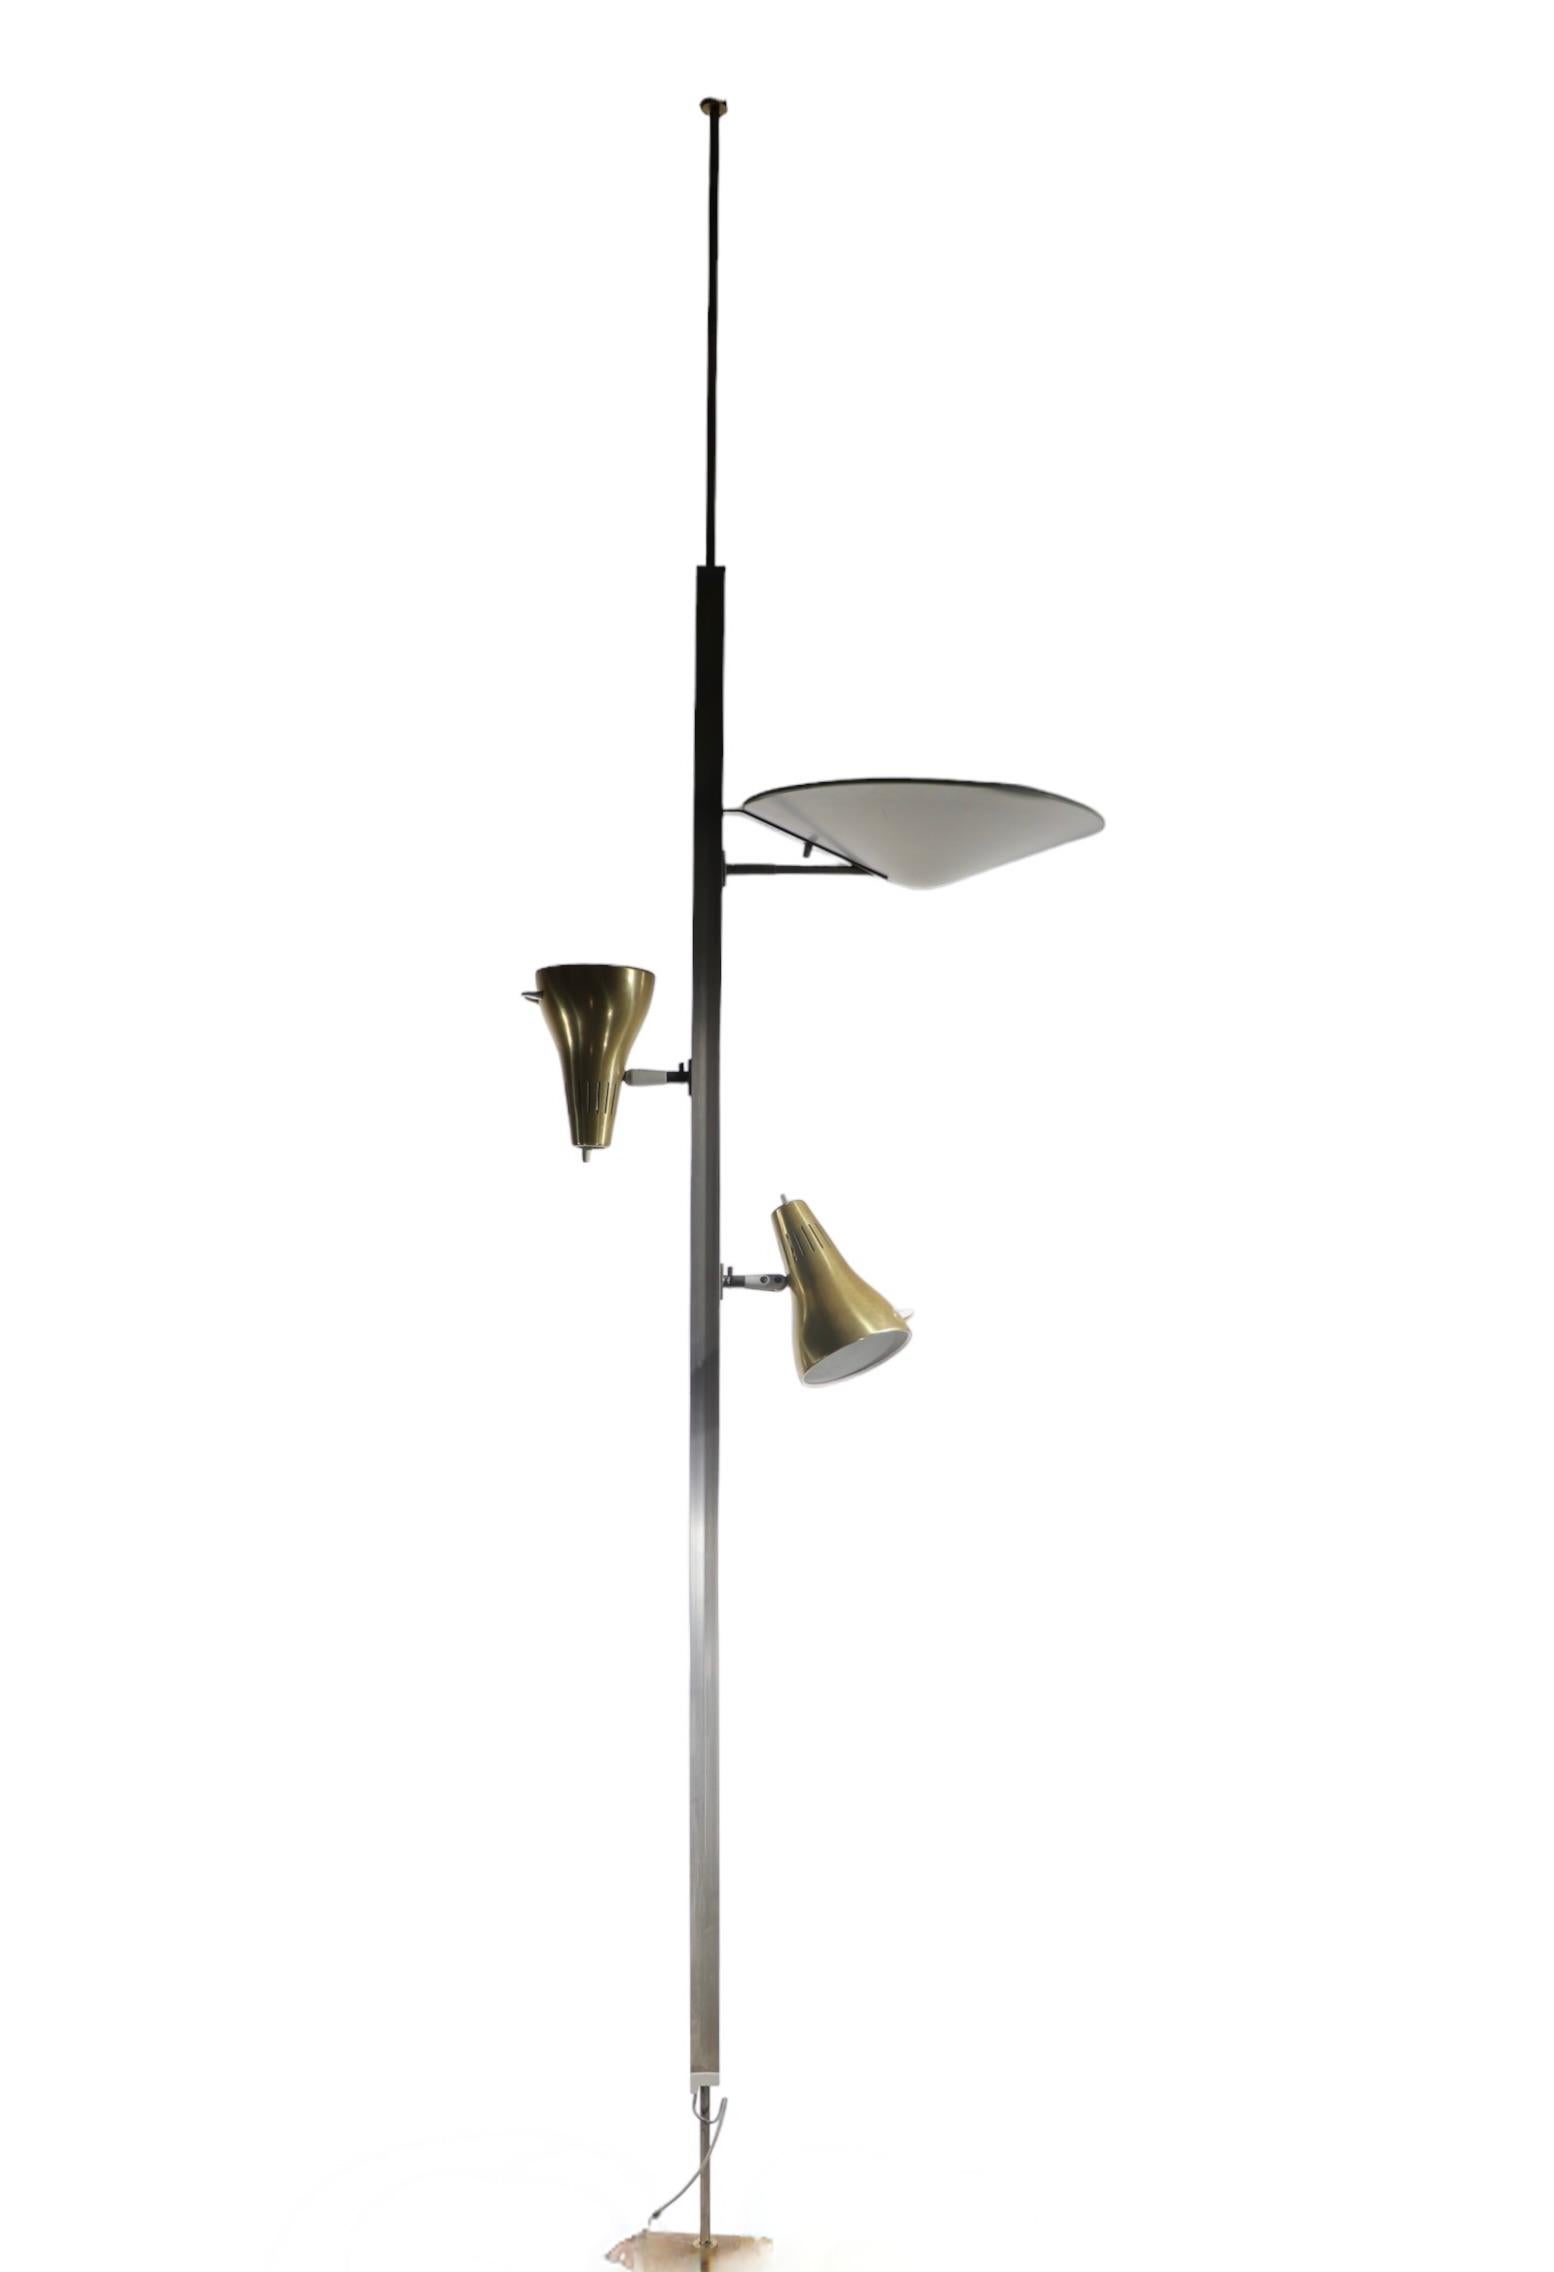 Mid-Century Modern Mid Century Lytespan Tension Floor Lamp By Thurston for Lightolier c 1950/1960's For Sale